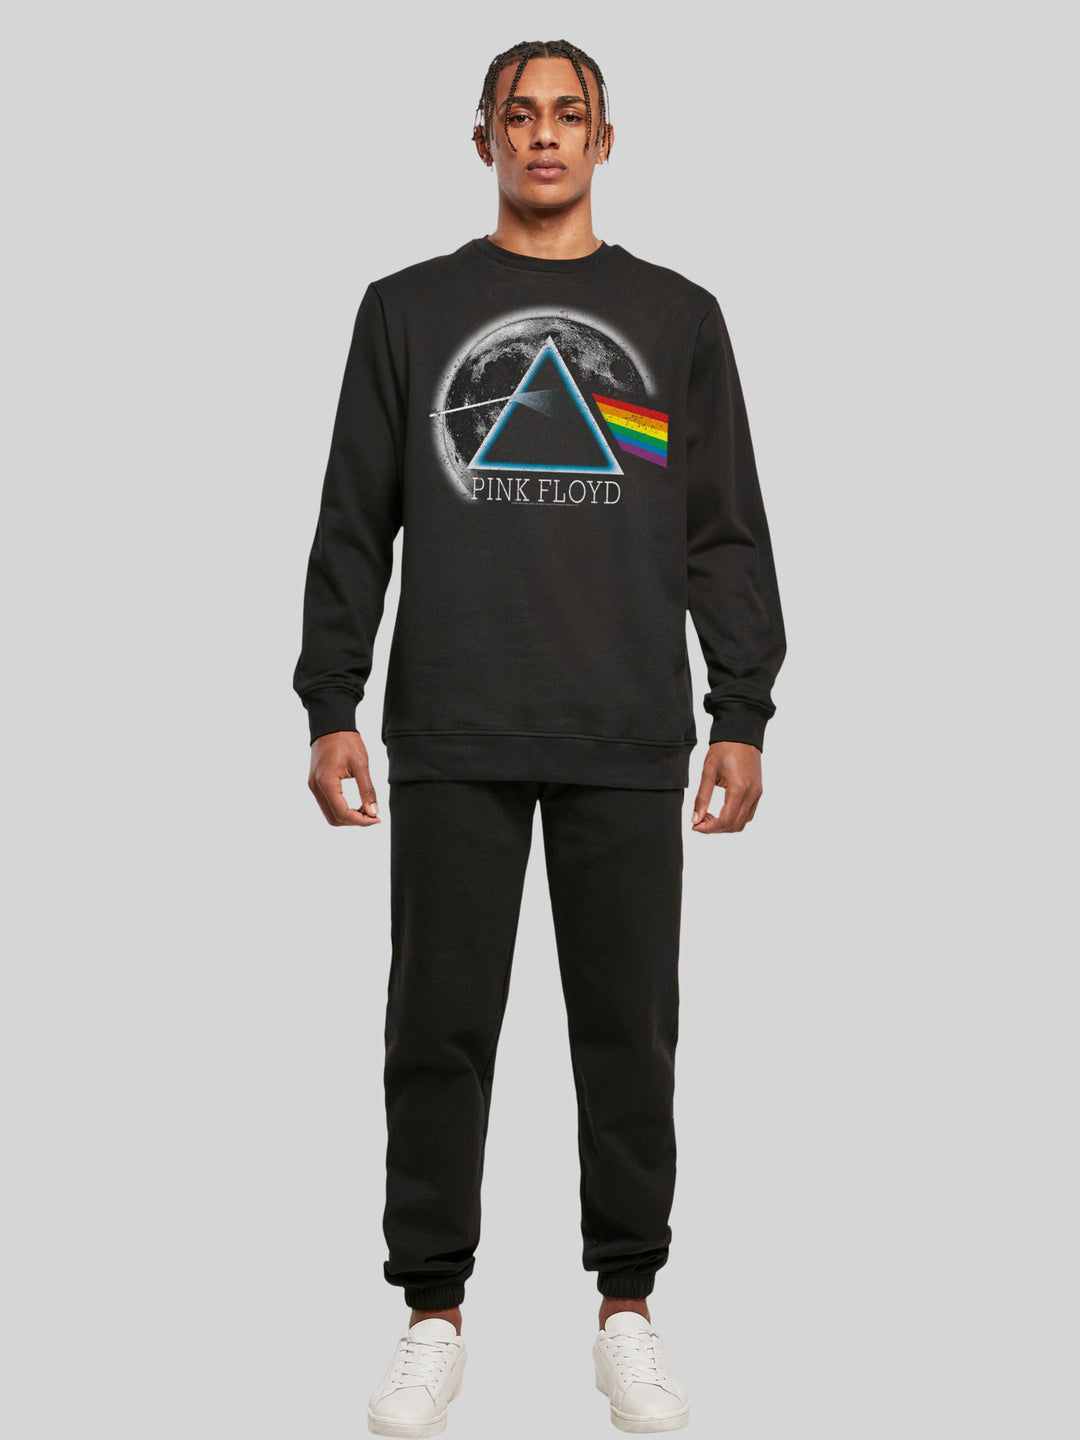 Pink Floyd Sweatshirt | Dark Side of The Moon  Men | Longsleeve Sweater